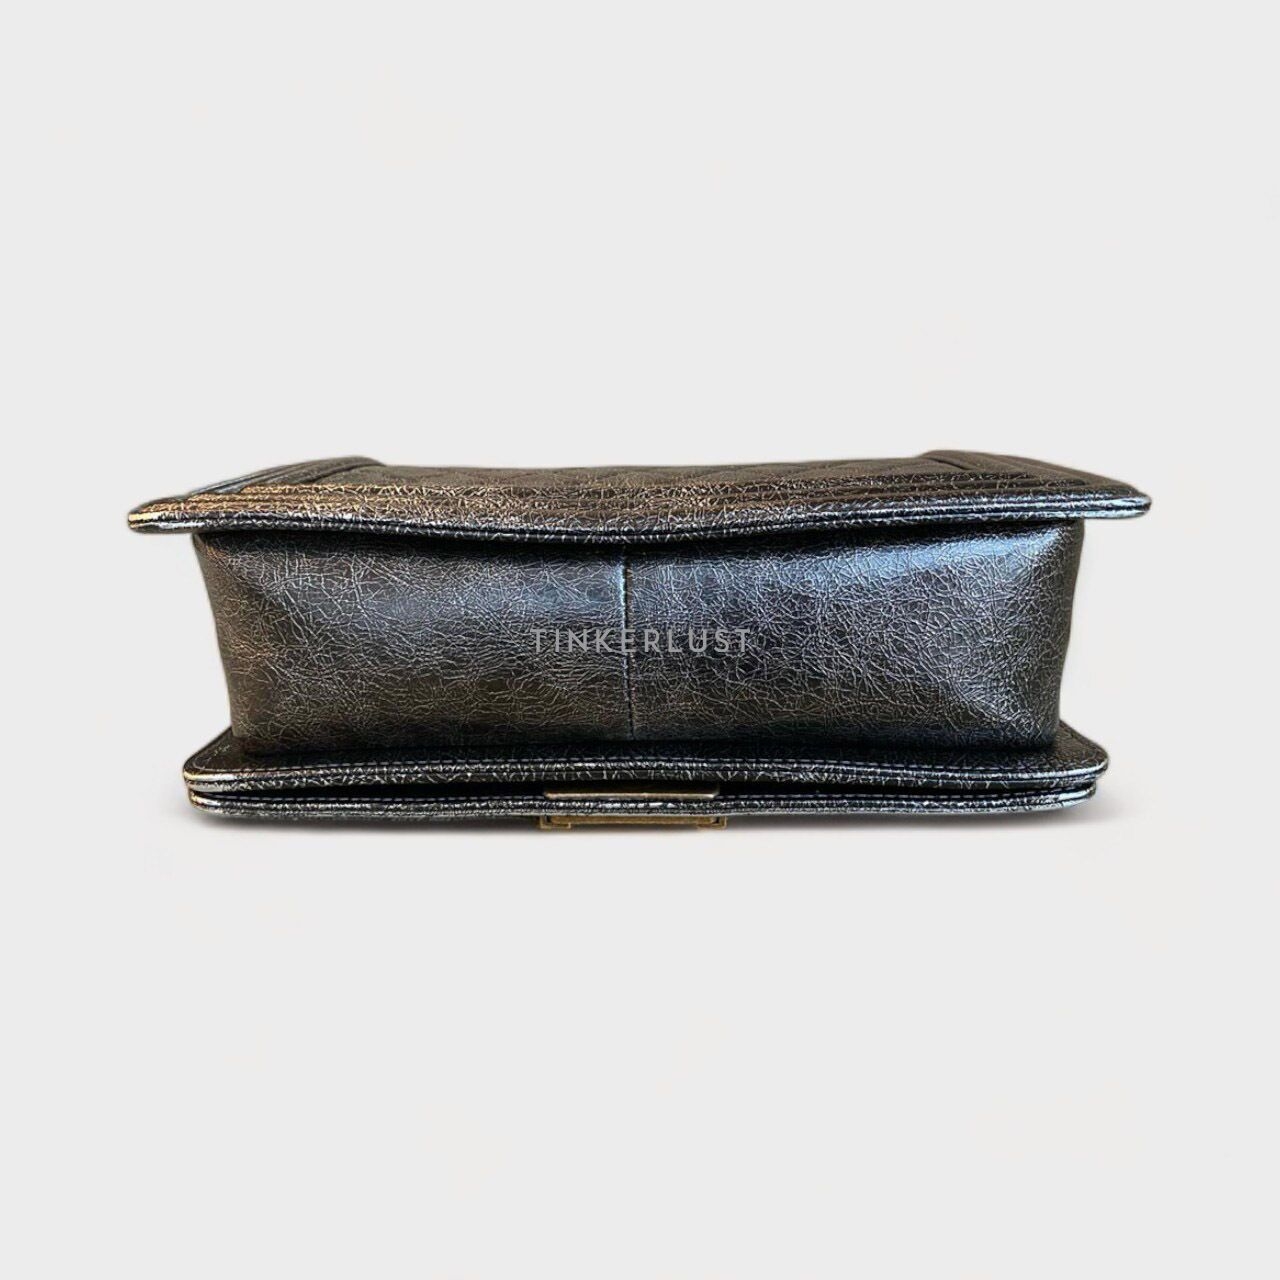 Chanel Boy Medium Black Metallic Cracked Leather Aged GHW #24 Shoulder Bag